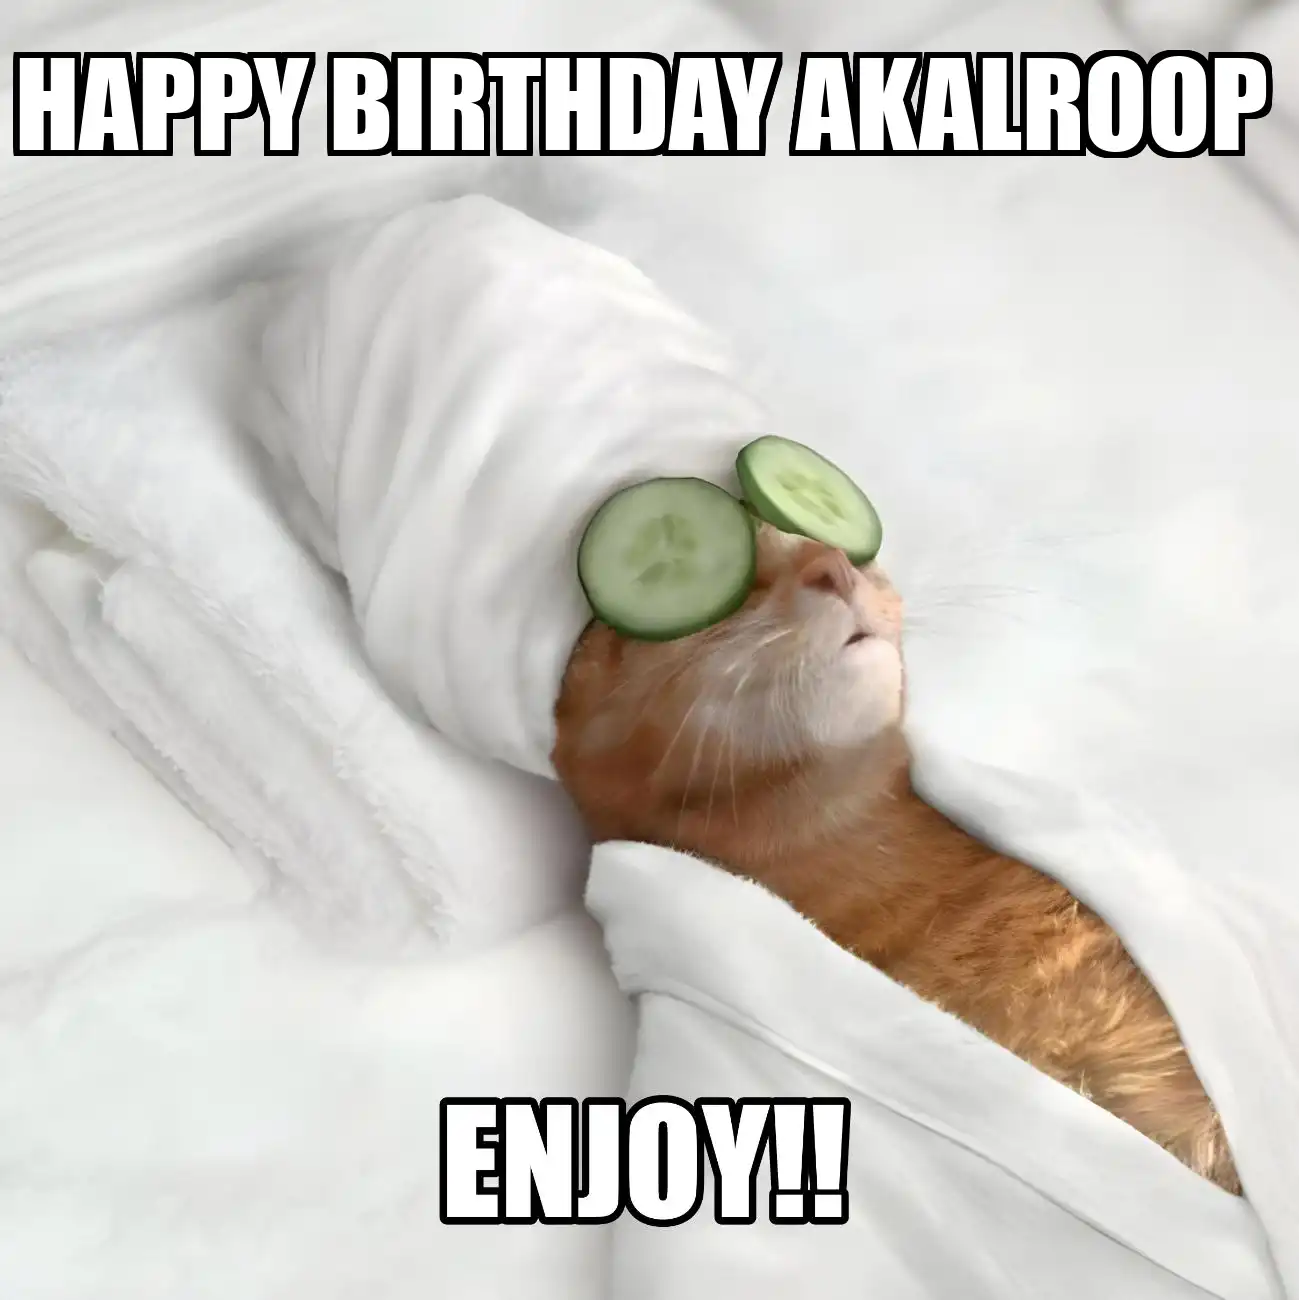 Happy Birthday Akalroop Enjoy Cat Meme